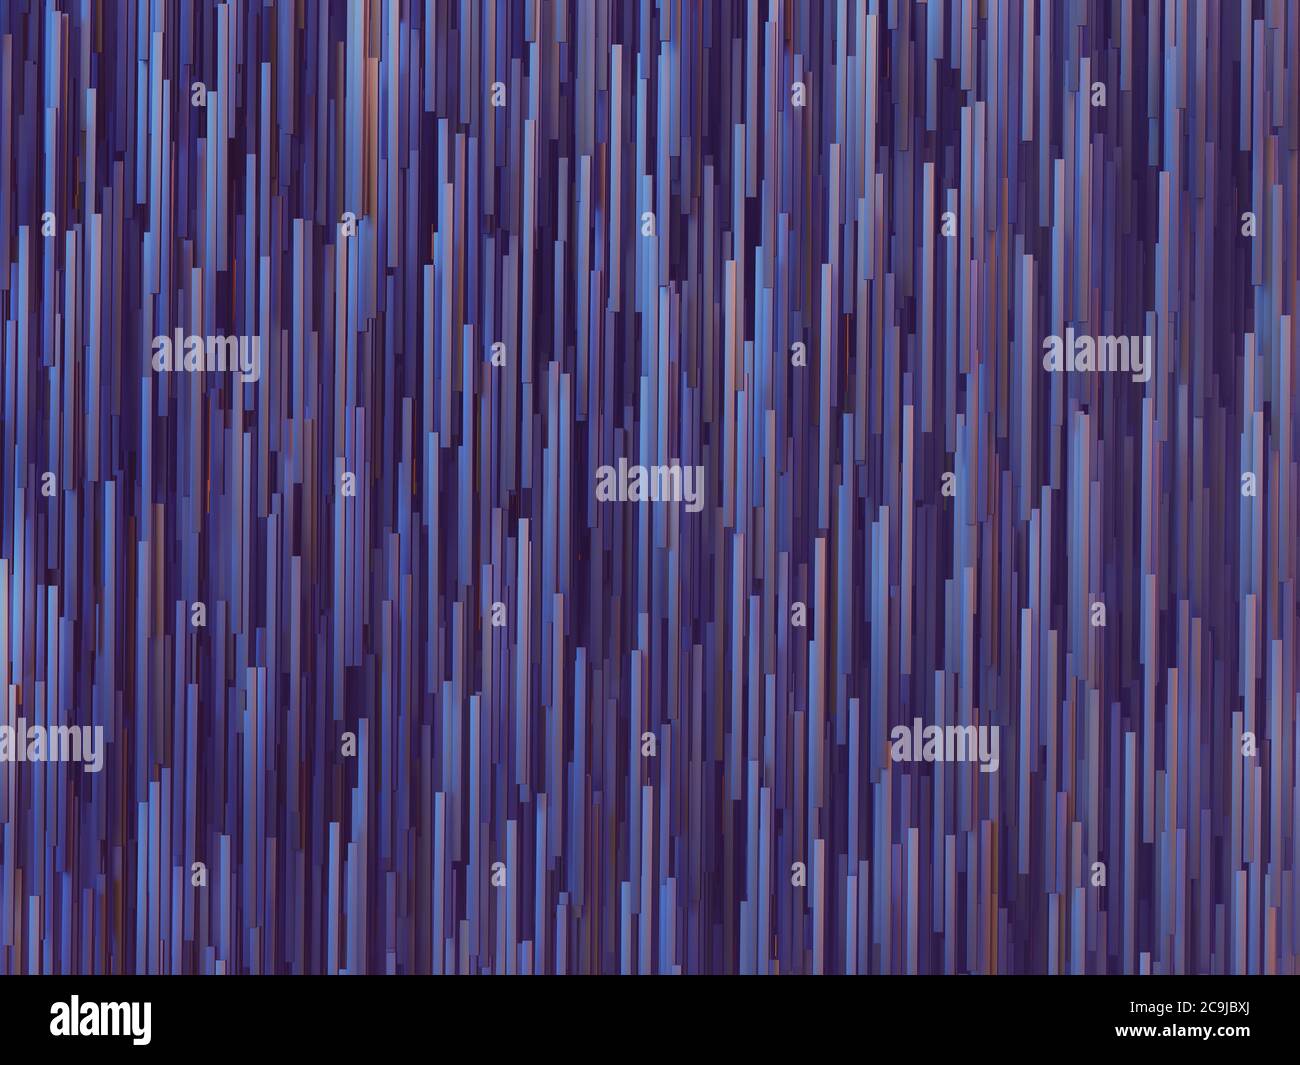 Purple abstract background, illustration. Stock Photo